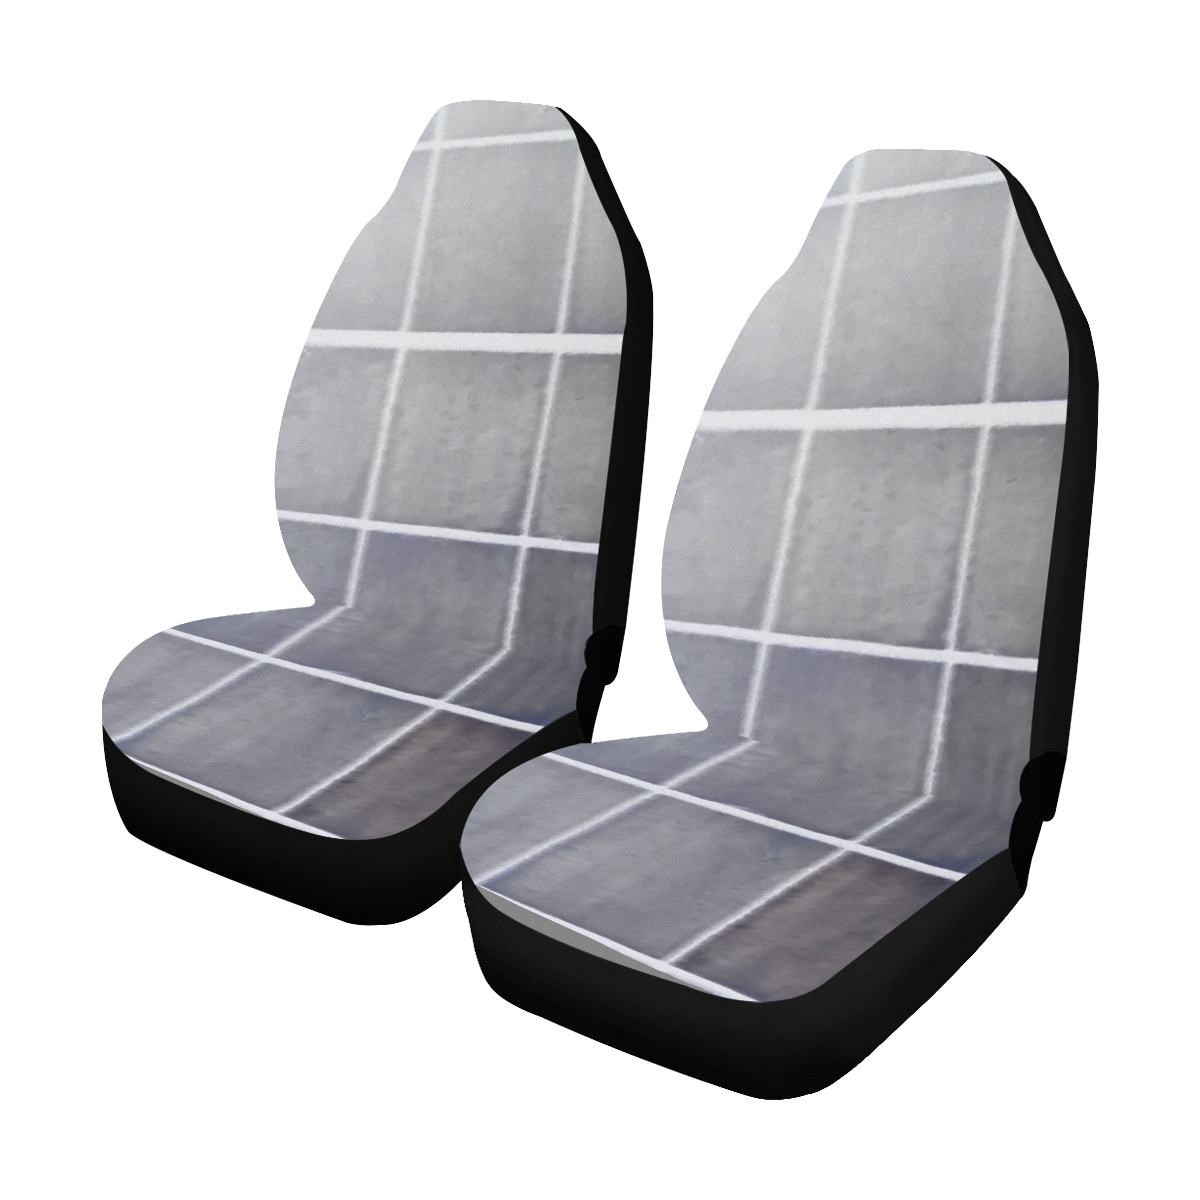 PANELZ Car Seat Covers (Set of 2)